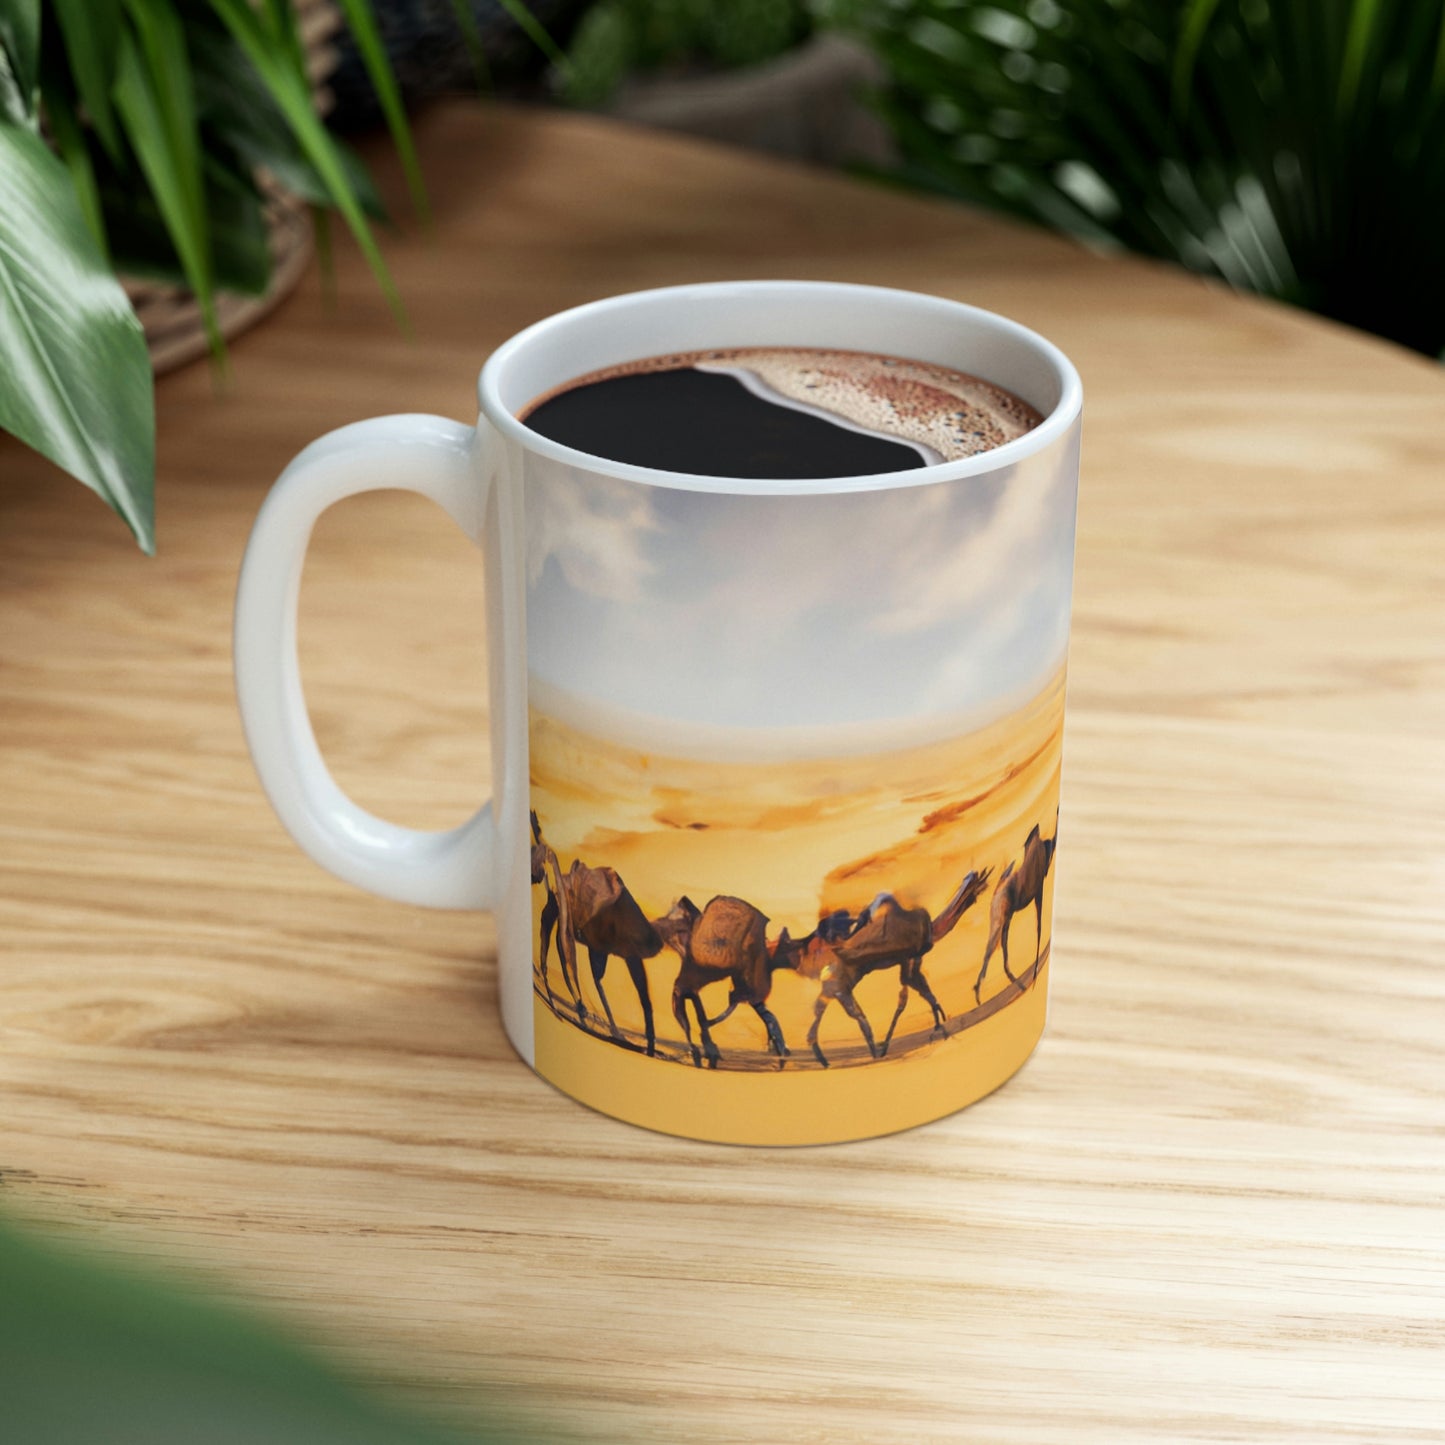 Ceramic Mug 11oz - Camel Caravan